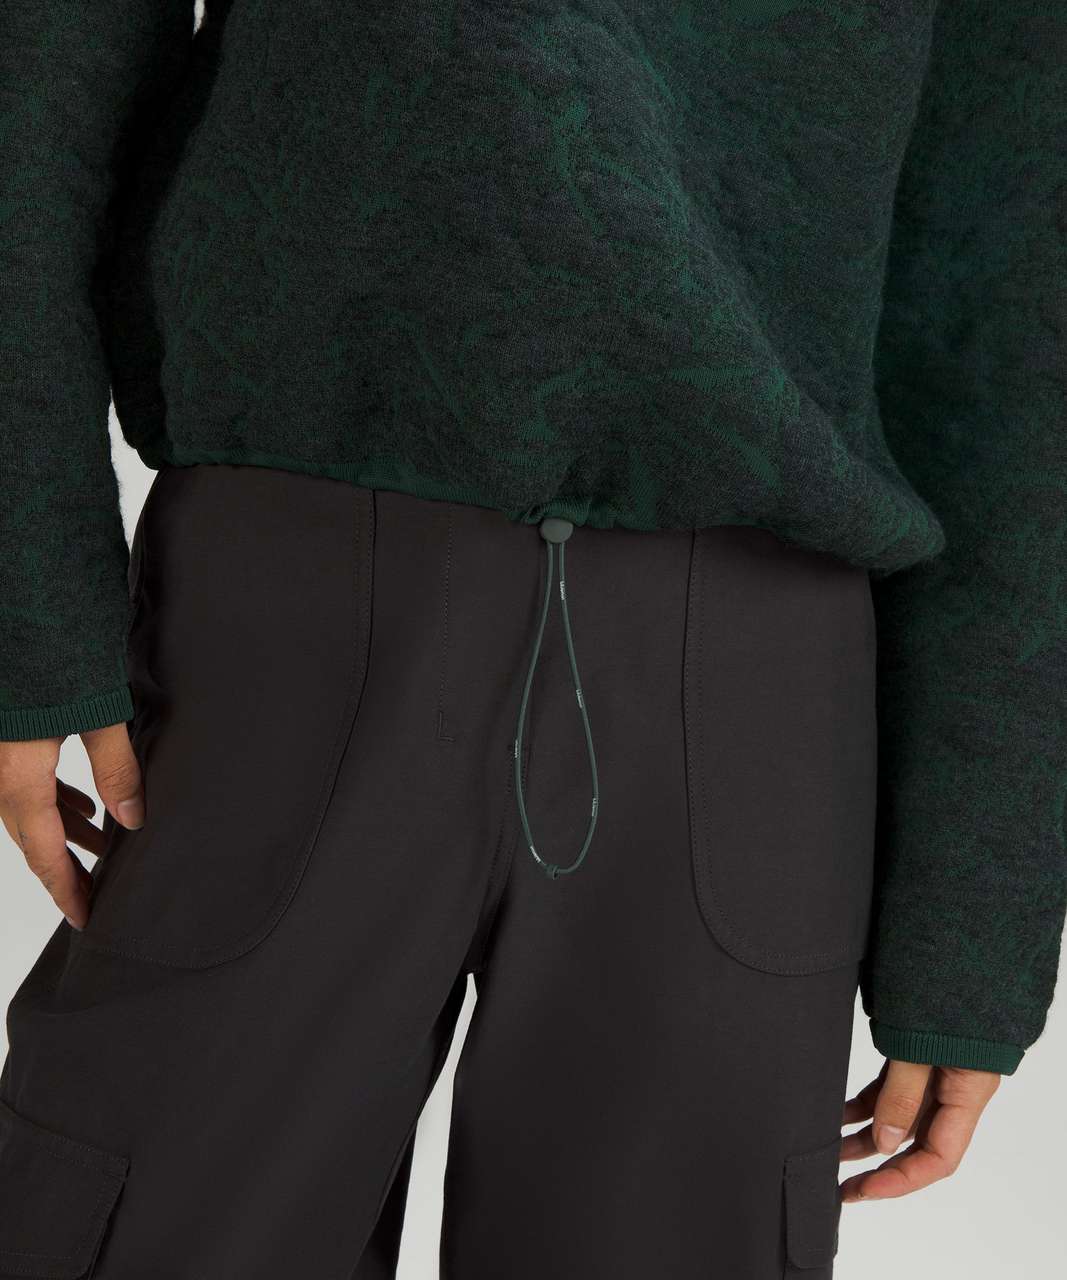 Lululemon Jacquard Multi-Texture Crew Neck Sweater - Heathered Smoked Spruce